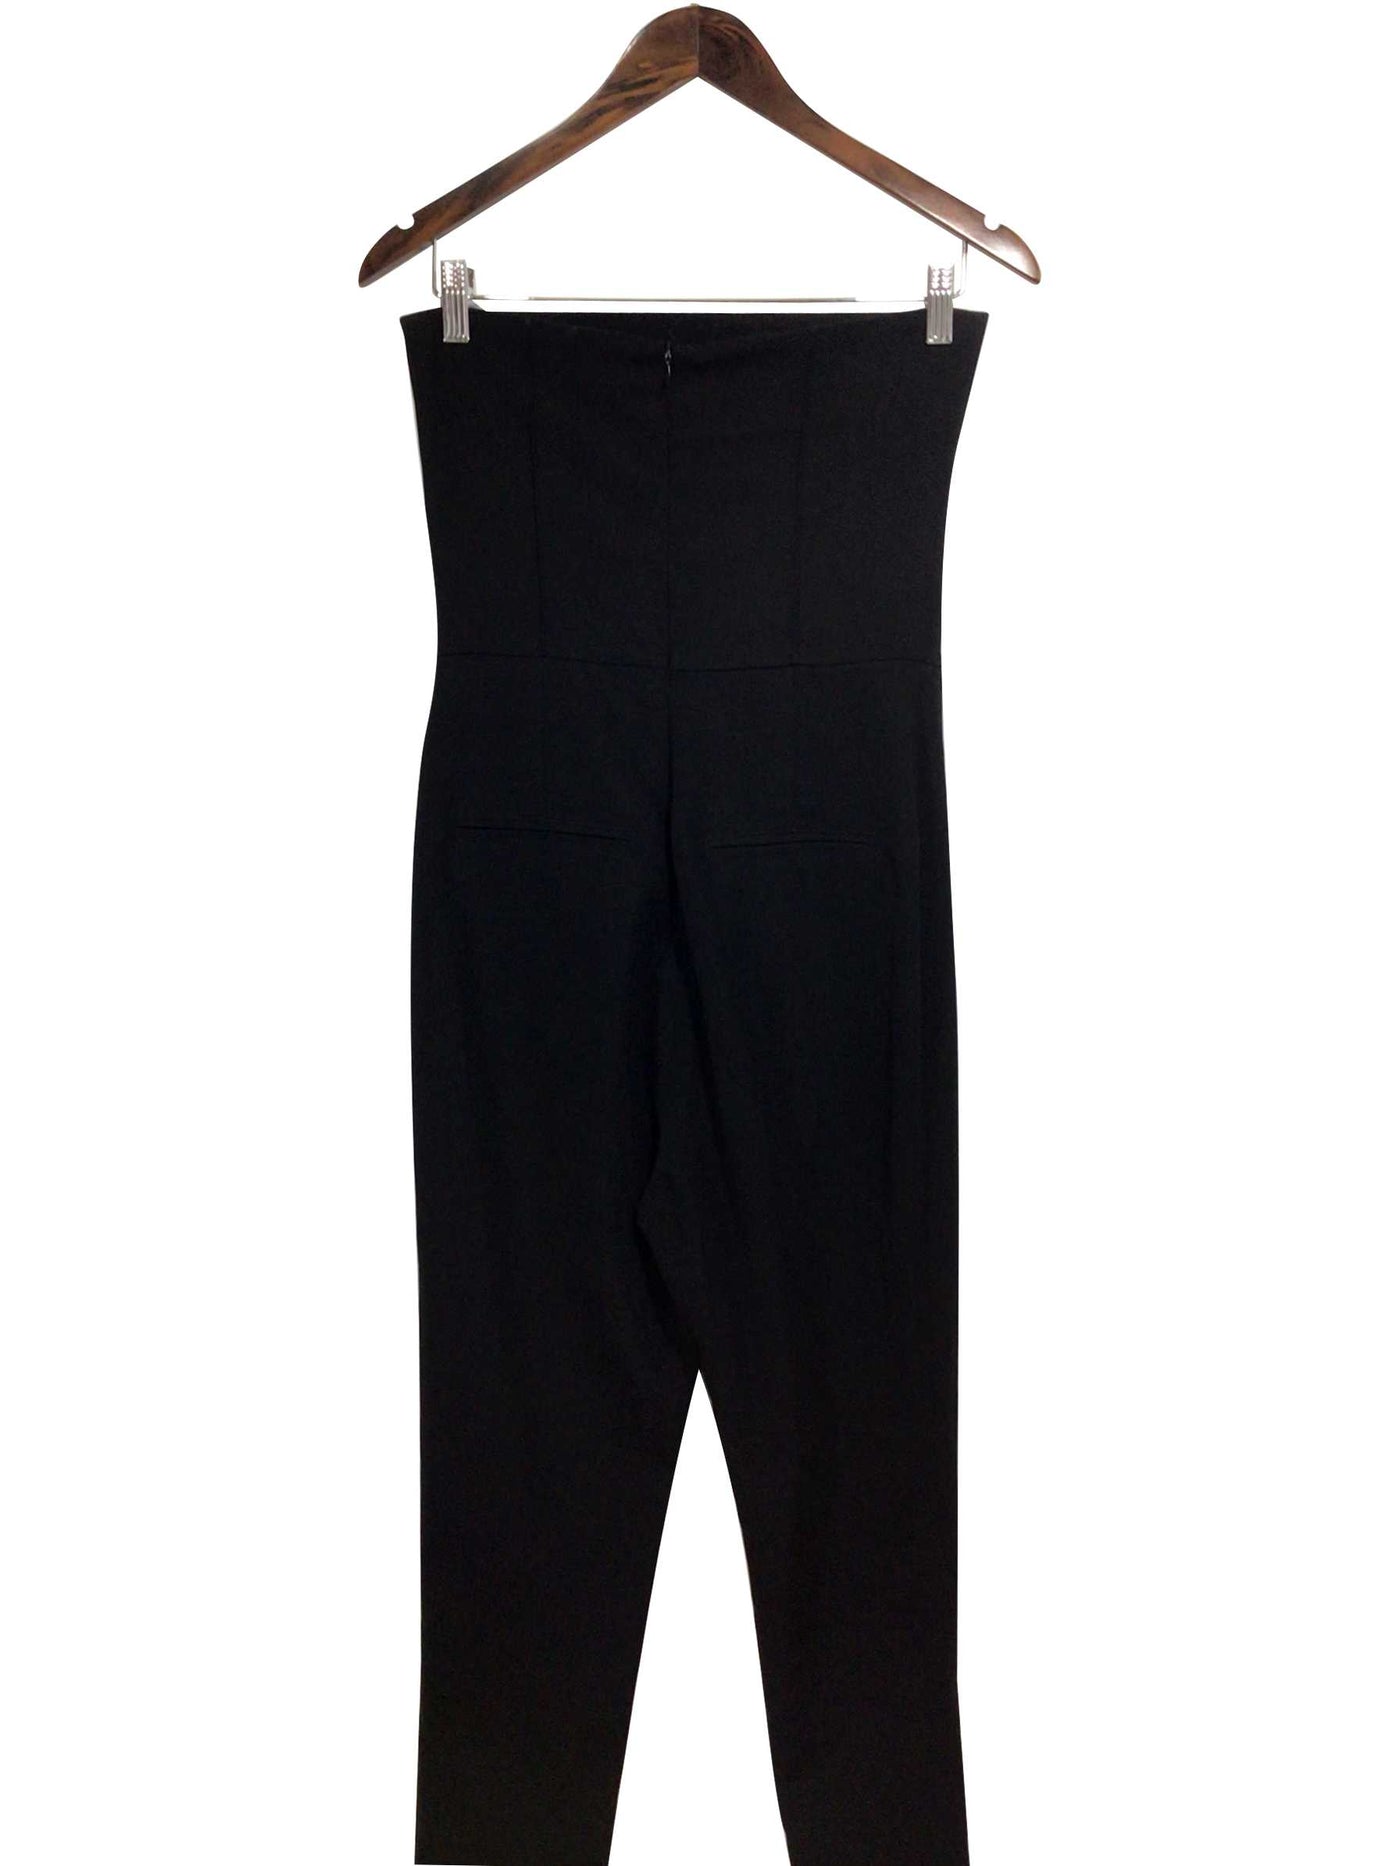 SIX CRISP DAYS Regular fit Pant in Black - Size S | 15 $ KOOP